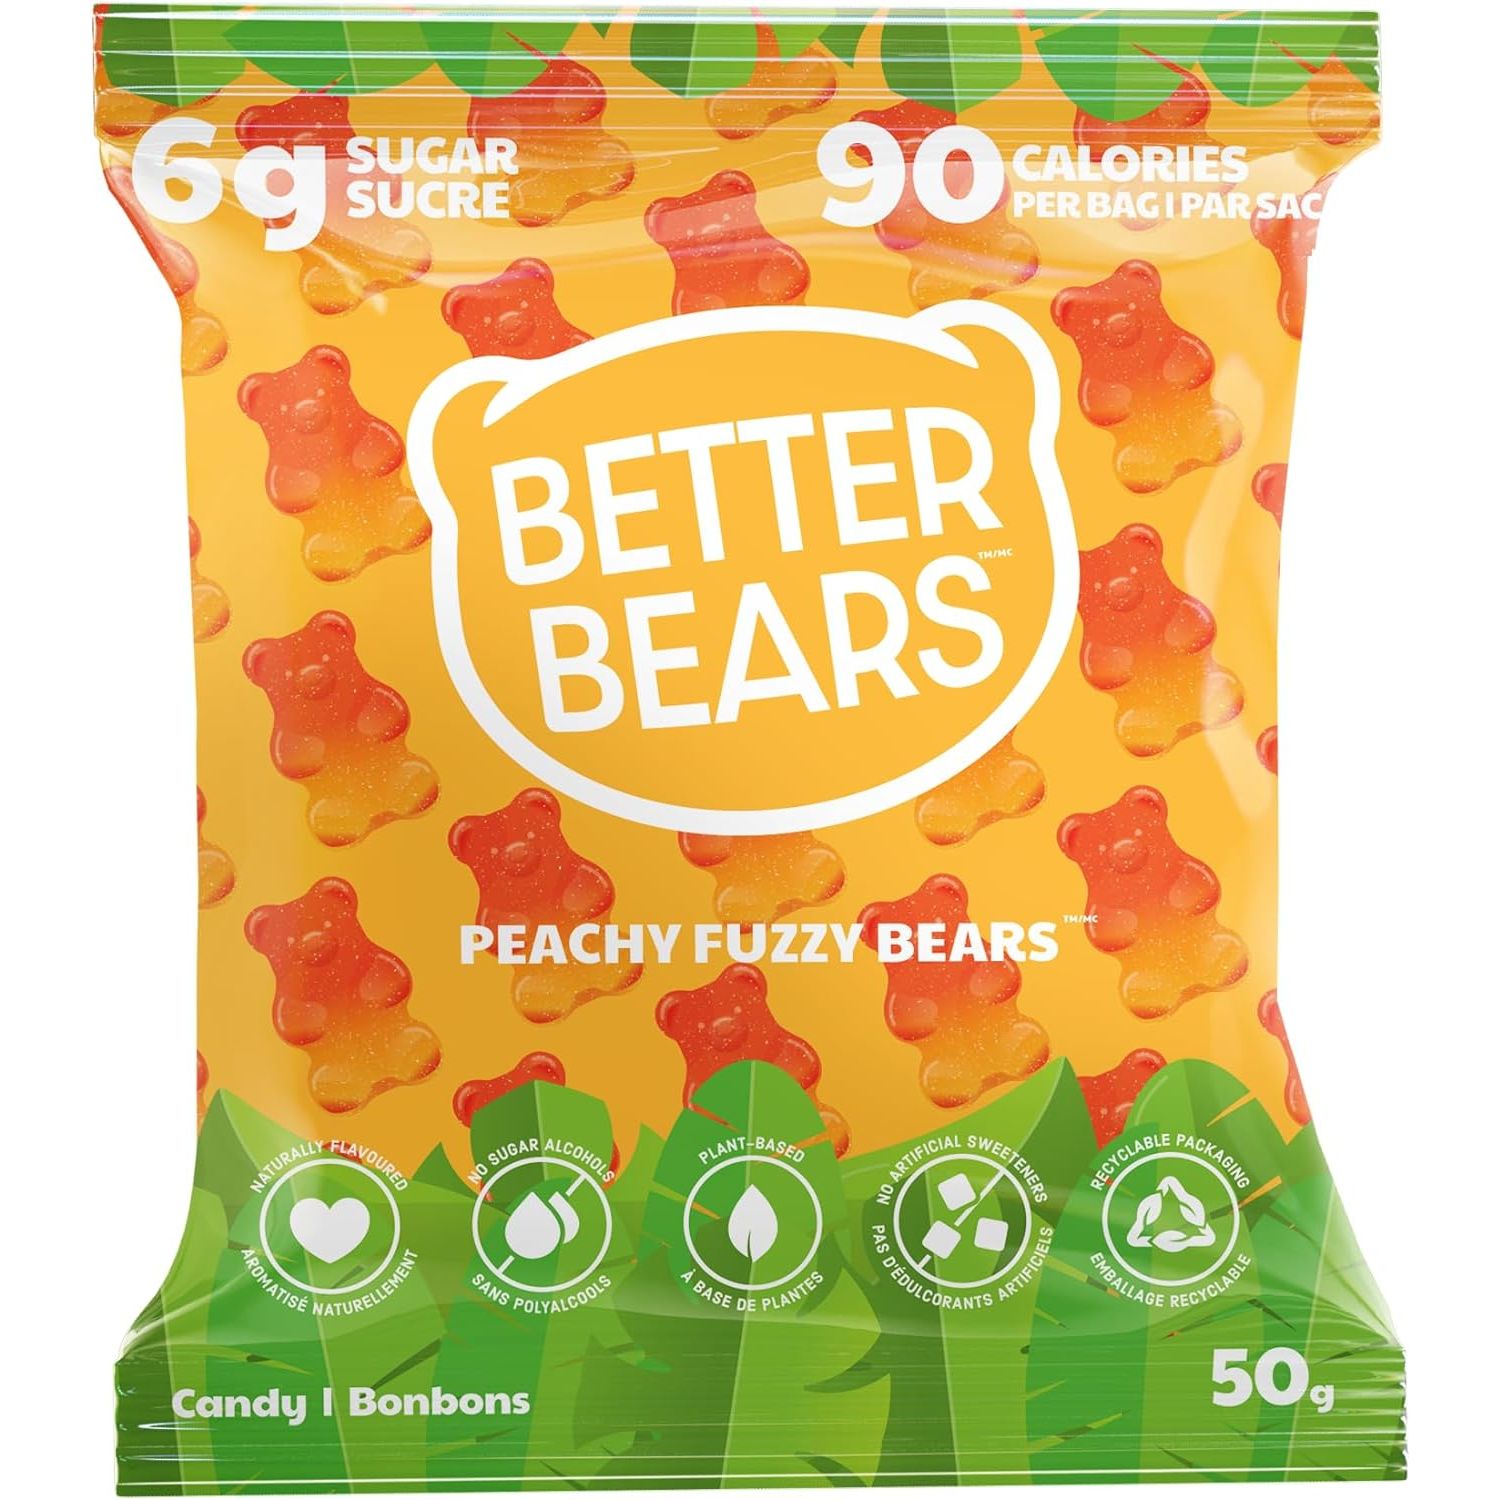 Better Bears Low Sugar Vegan Gummies (1 bag) Protein Snacks Peachy Fuzzy Bears Better Bears